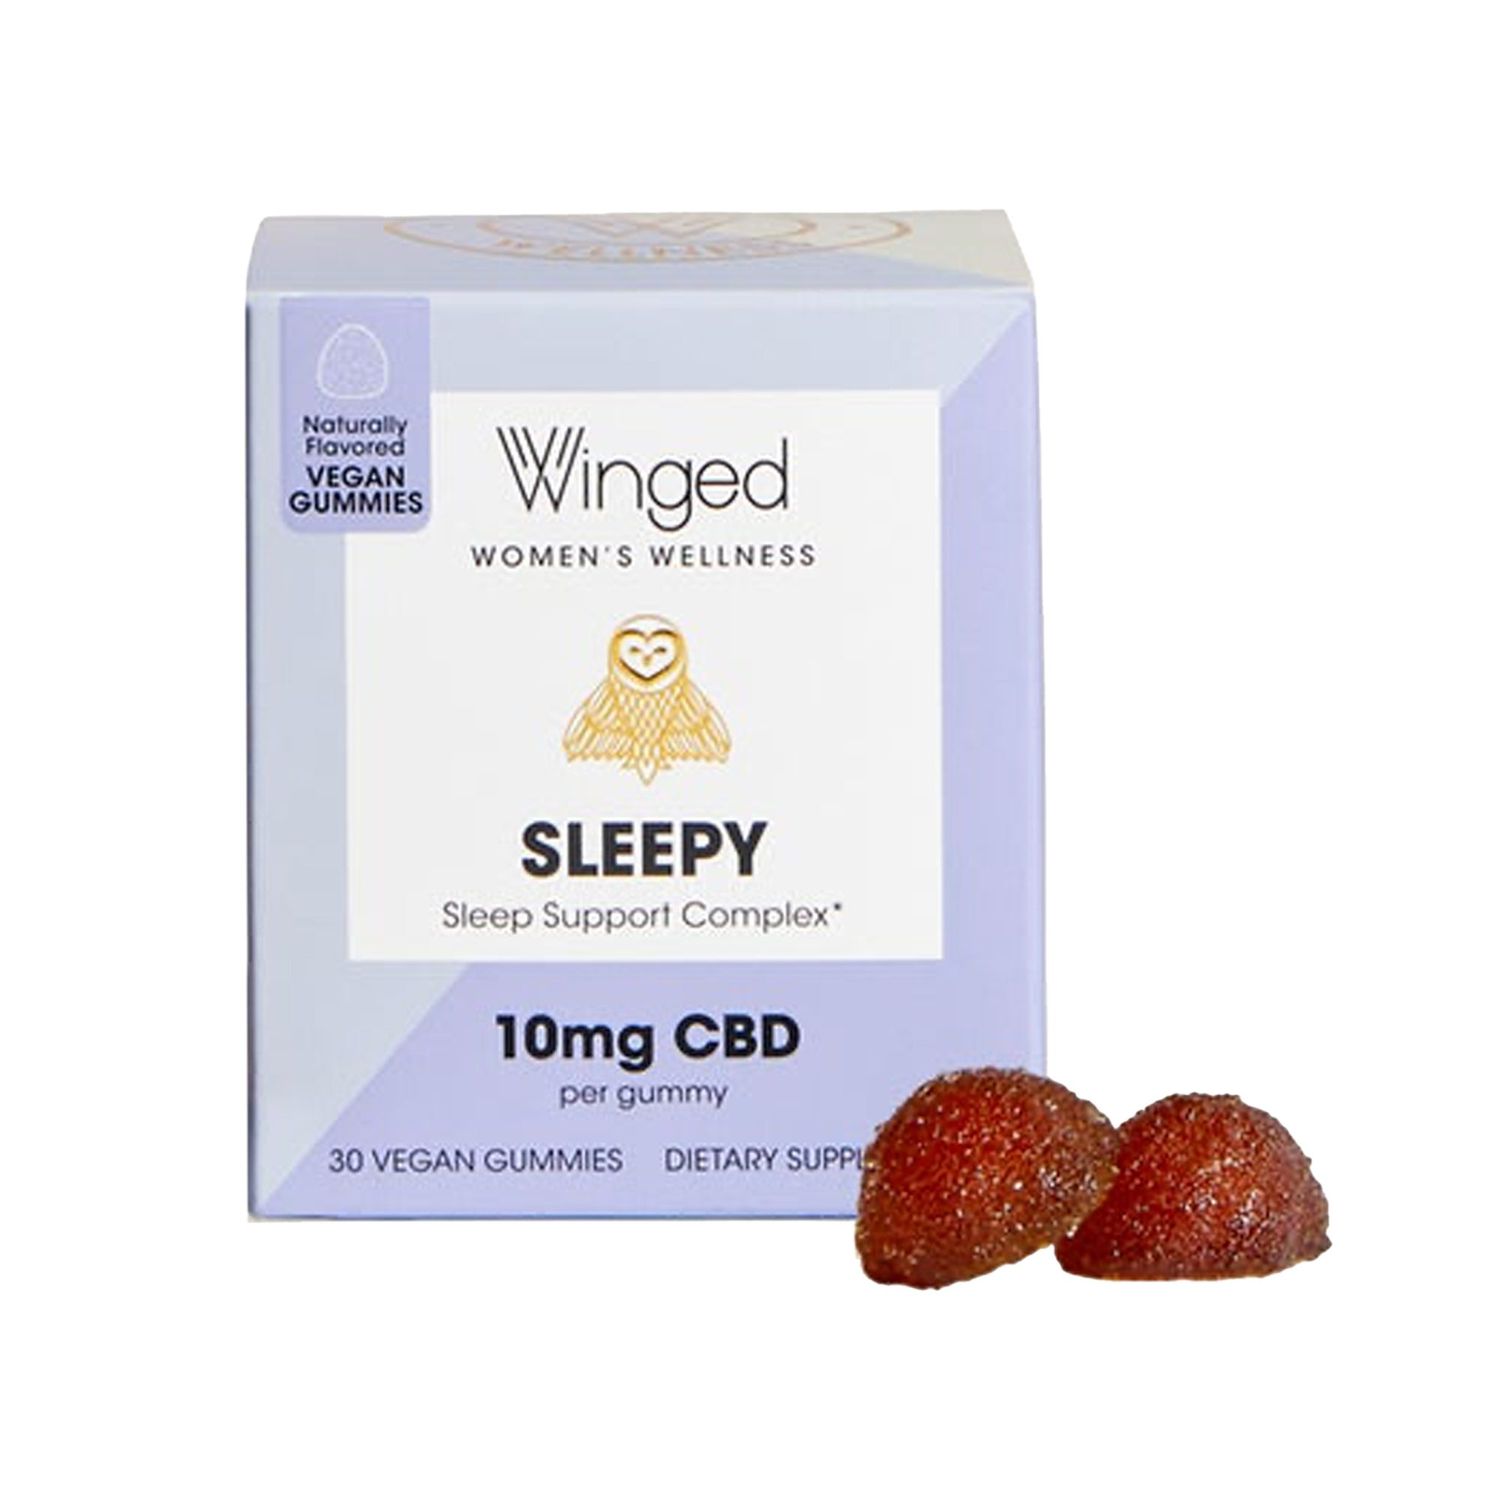 Winged-Sleepy CBD Gummies with 5-HTP and GABA-CBD-Gummies